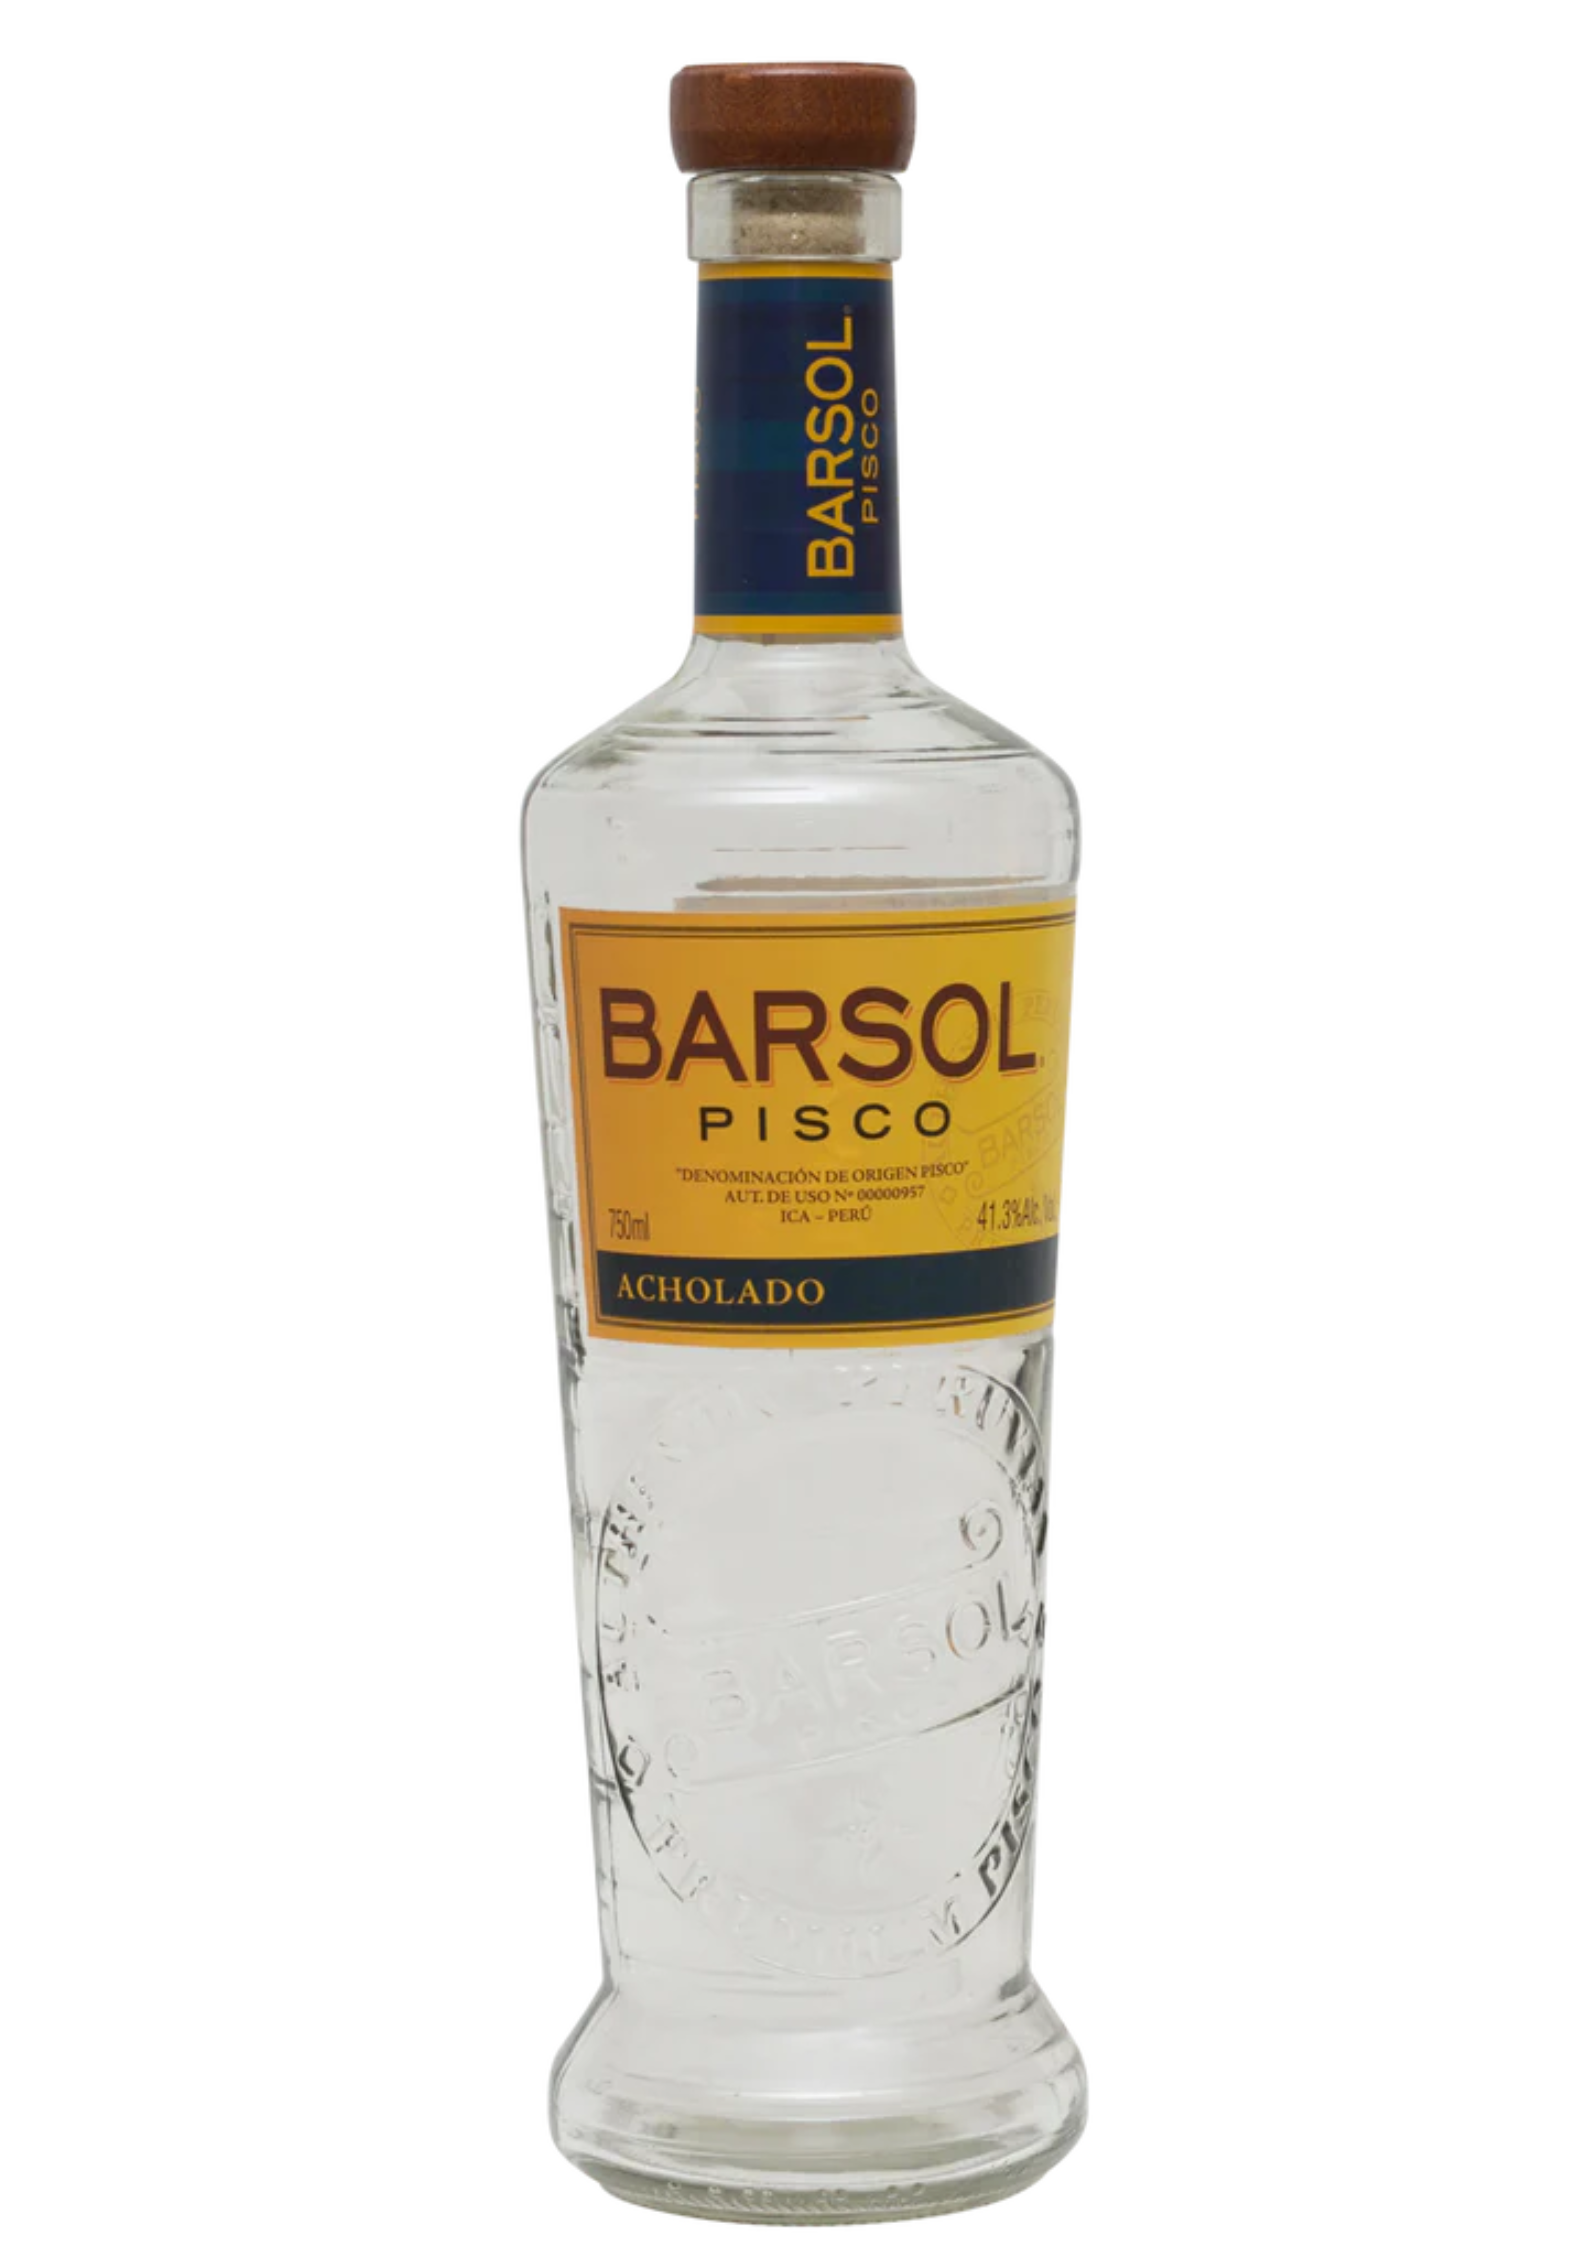 Bottle of Barsol Pisco Alcholado, 41.3% - The Spirits Room